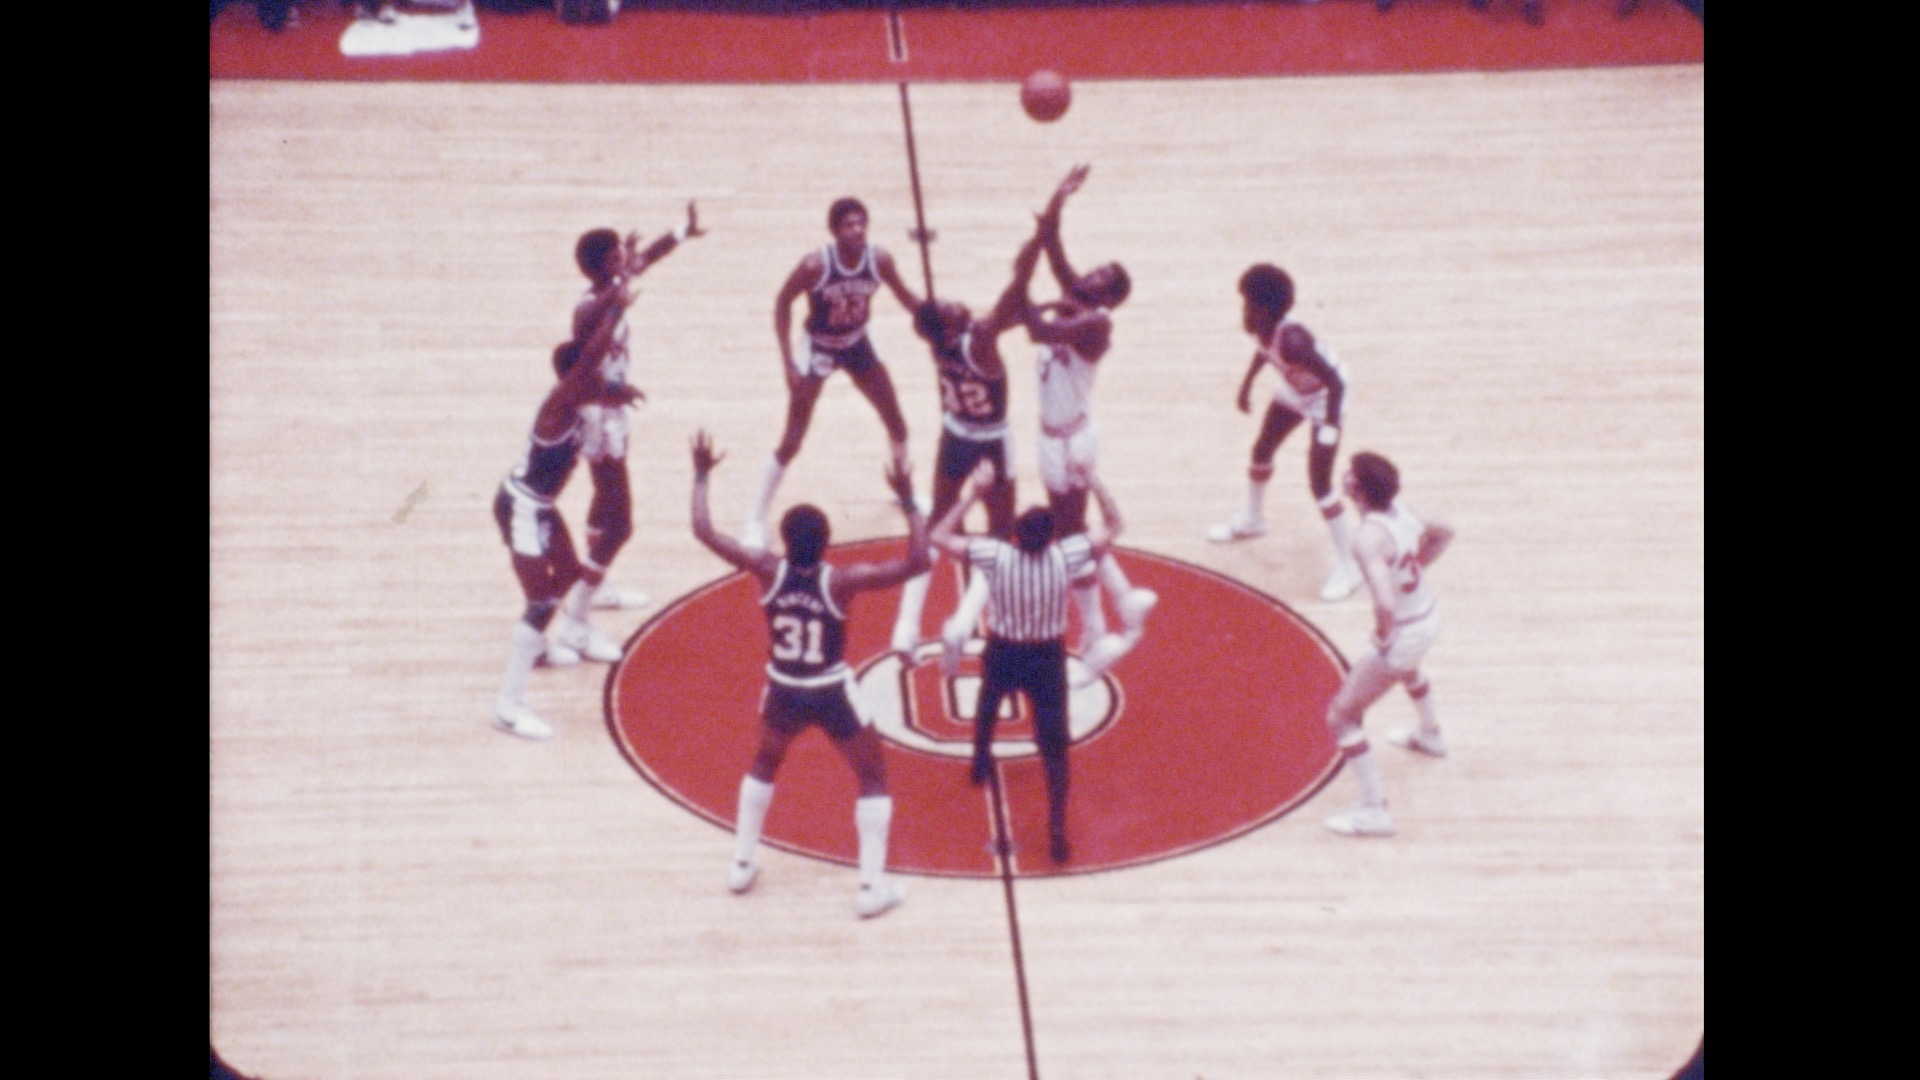 MSU Basketball vs. Ohio State (away), 1978